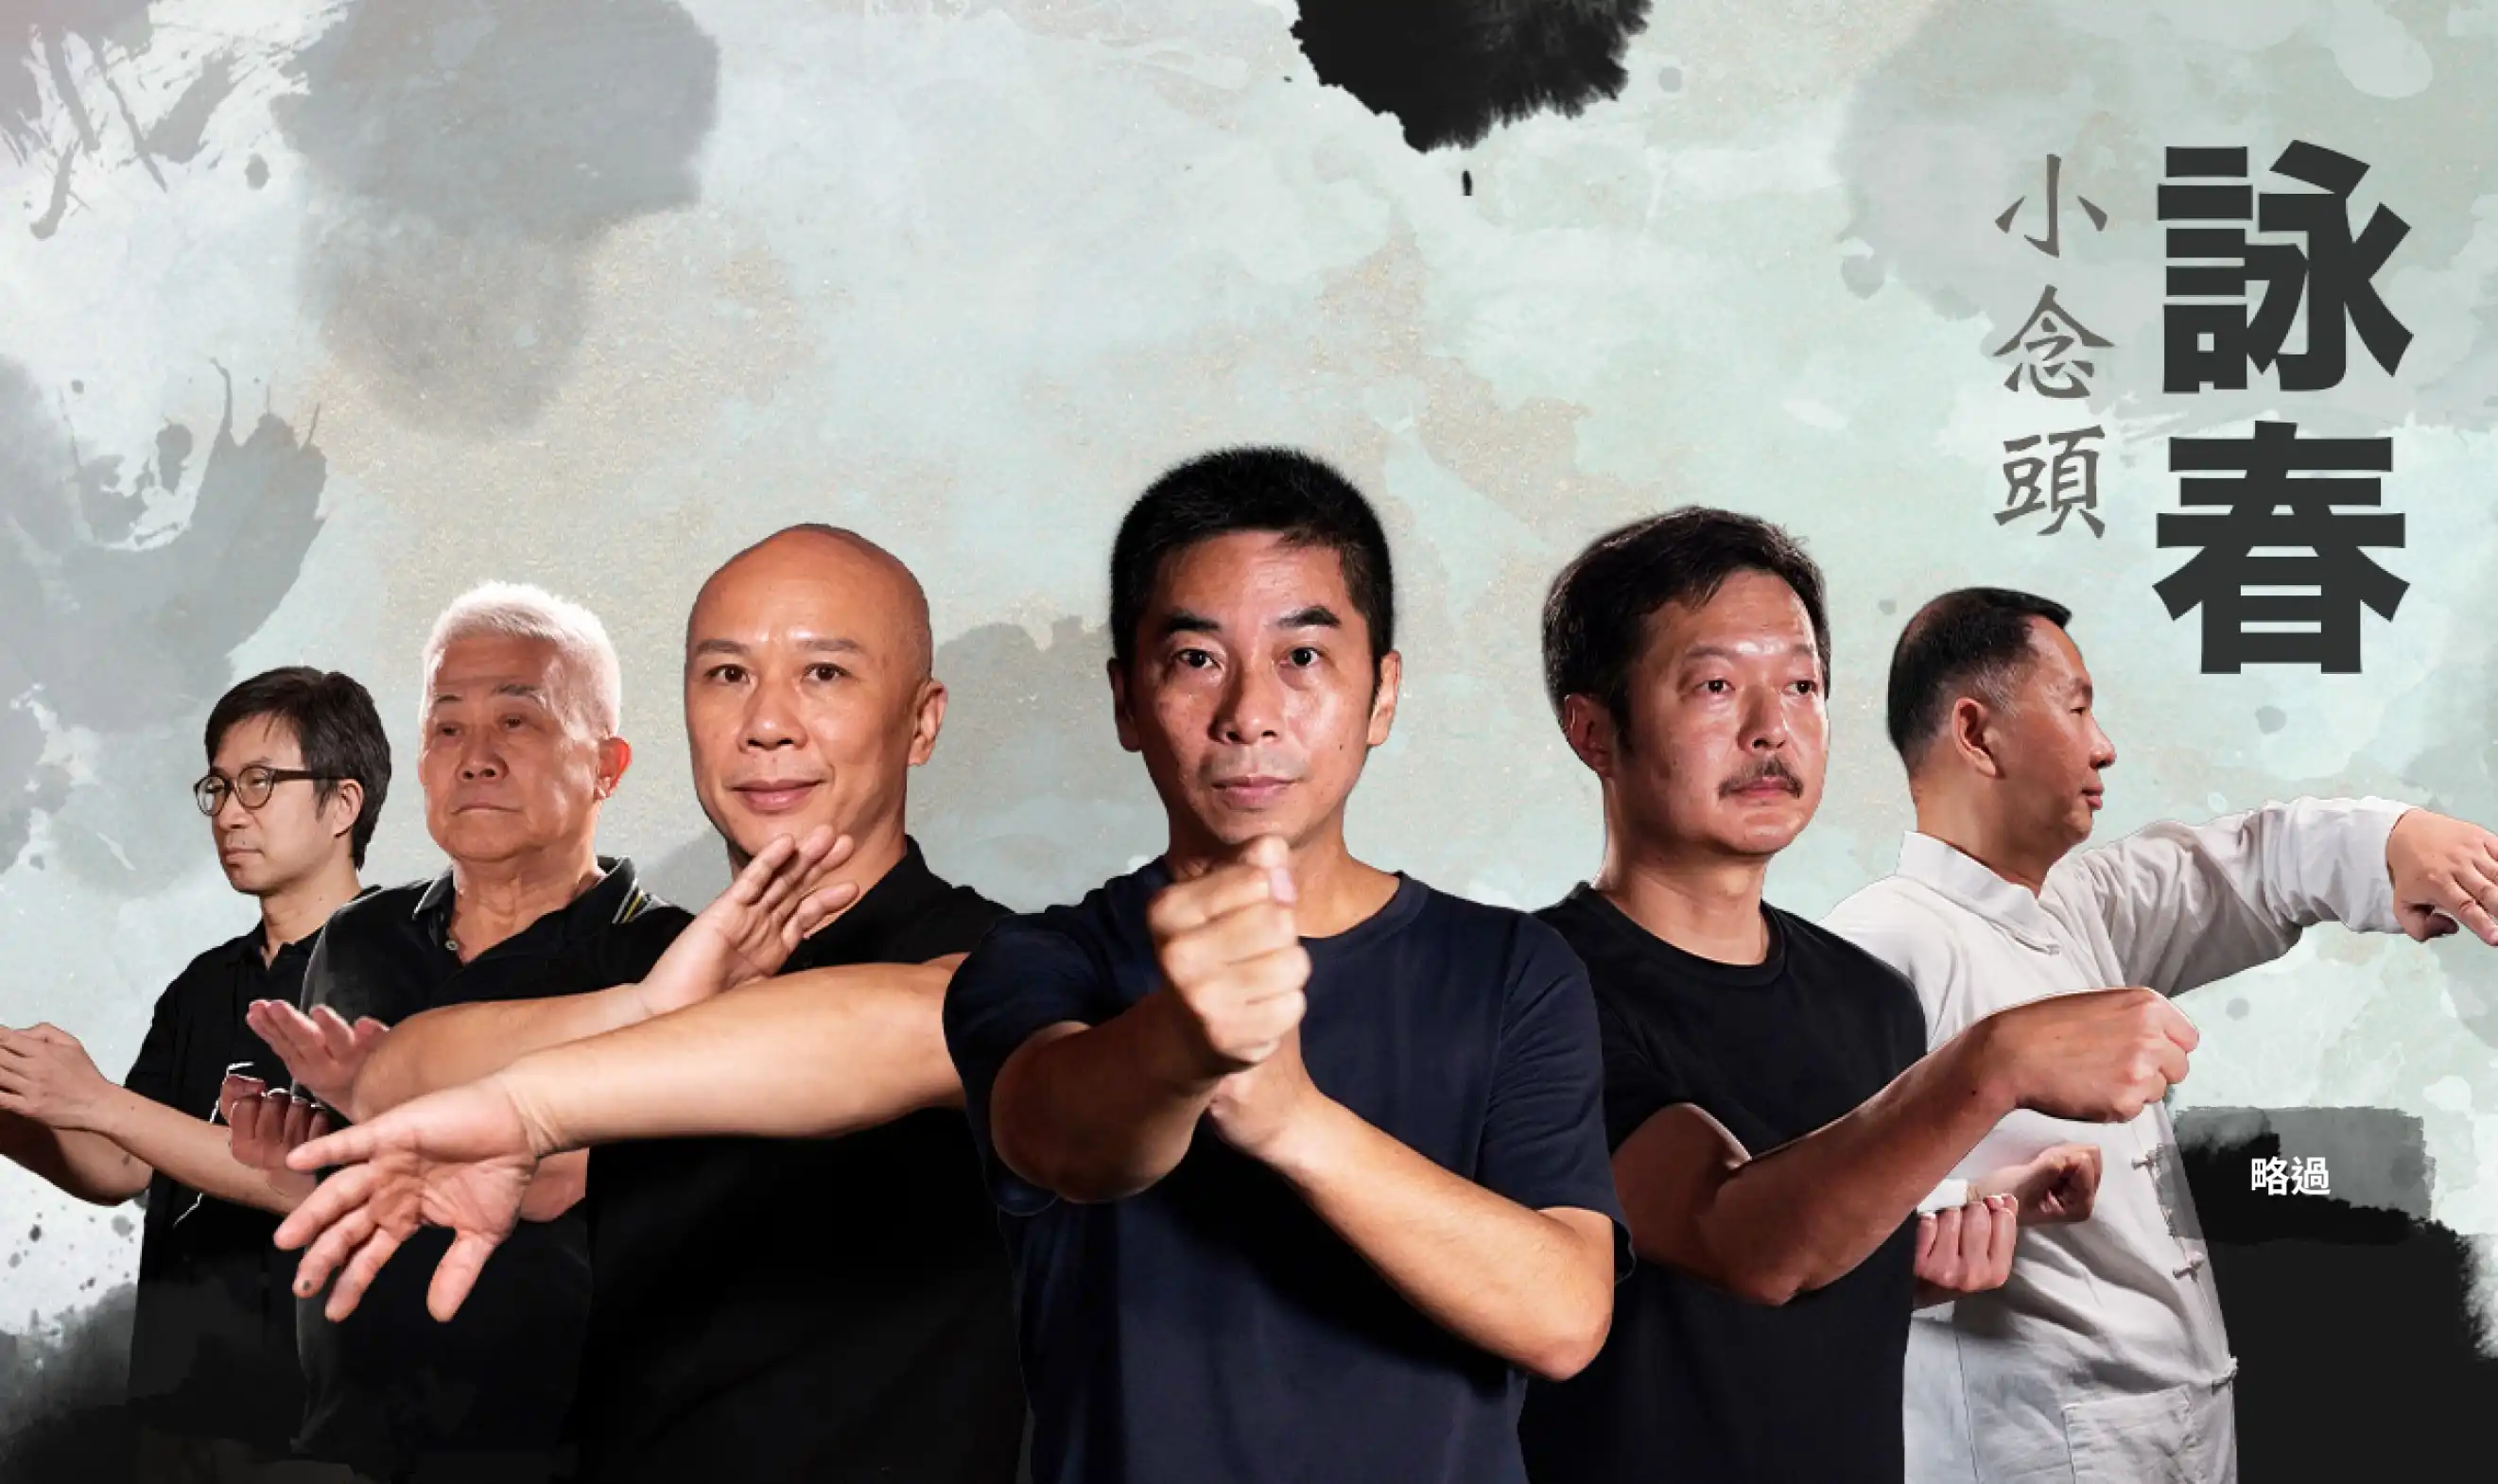 Six Ving Tsun Masters demonstrating "Siu Nim Tao" under water stains background